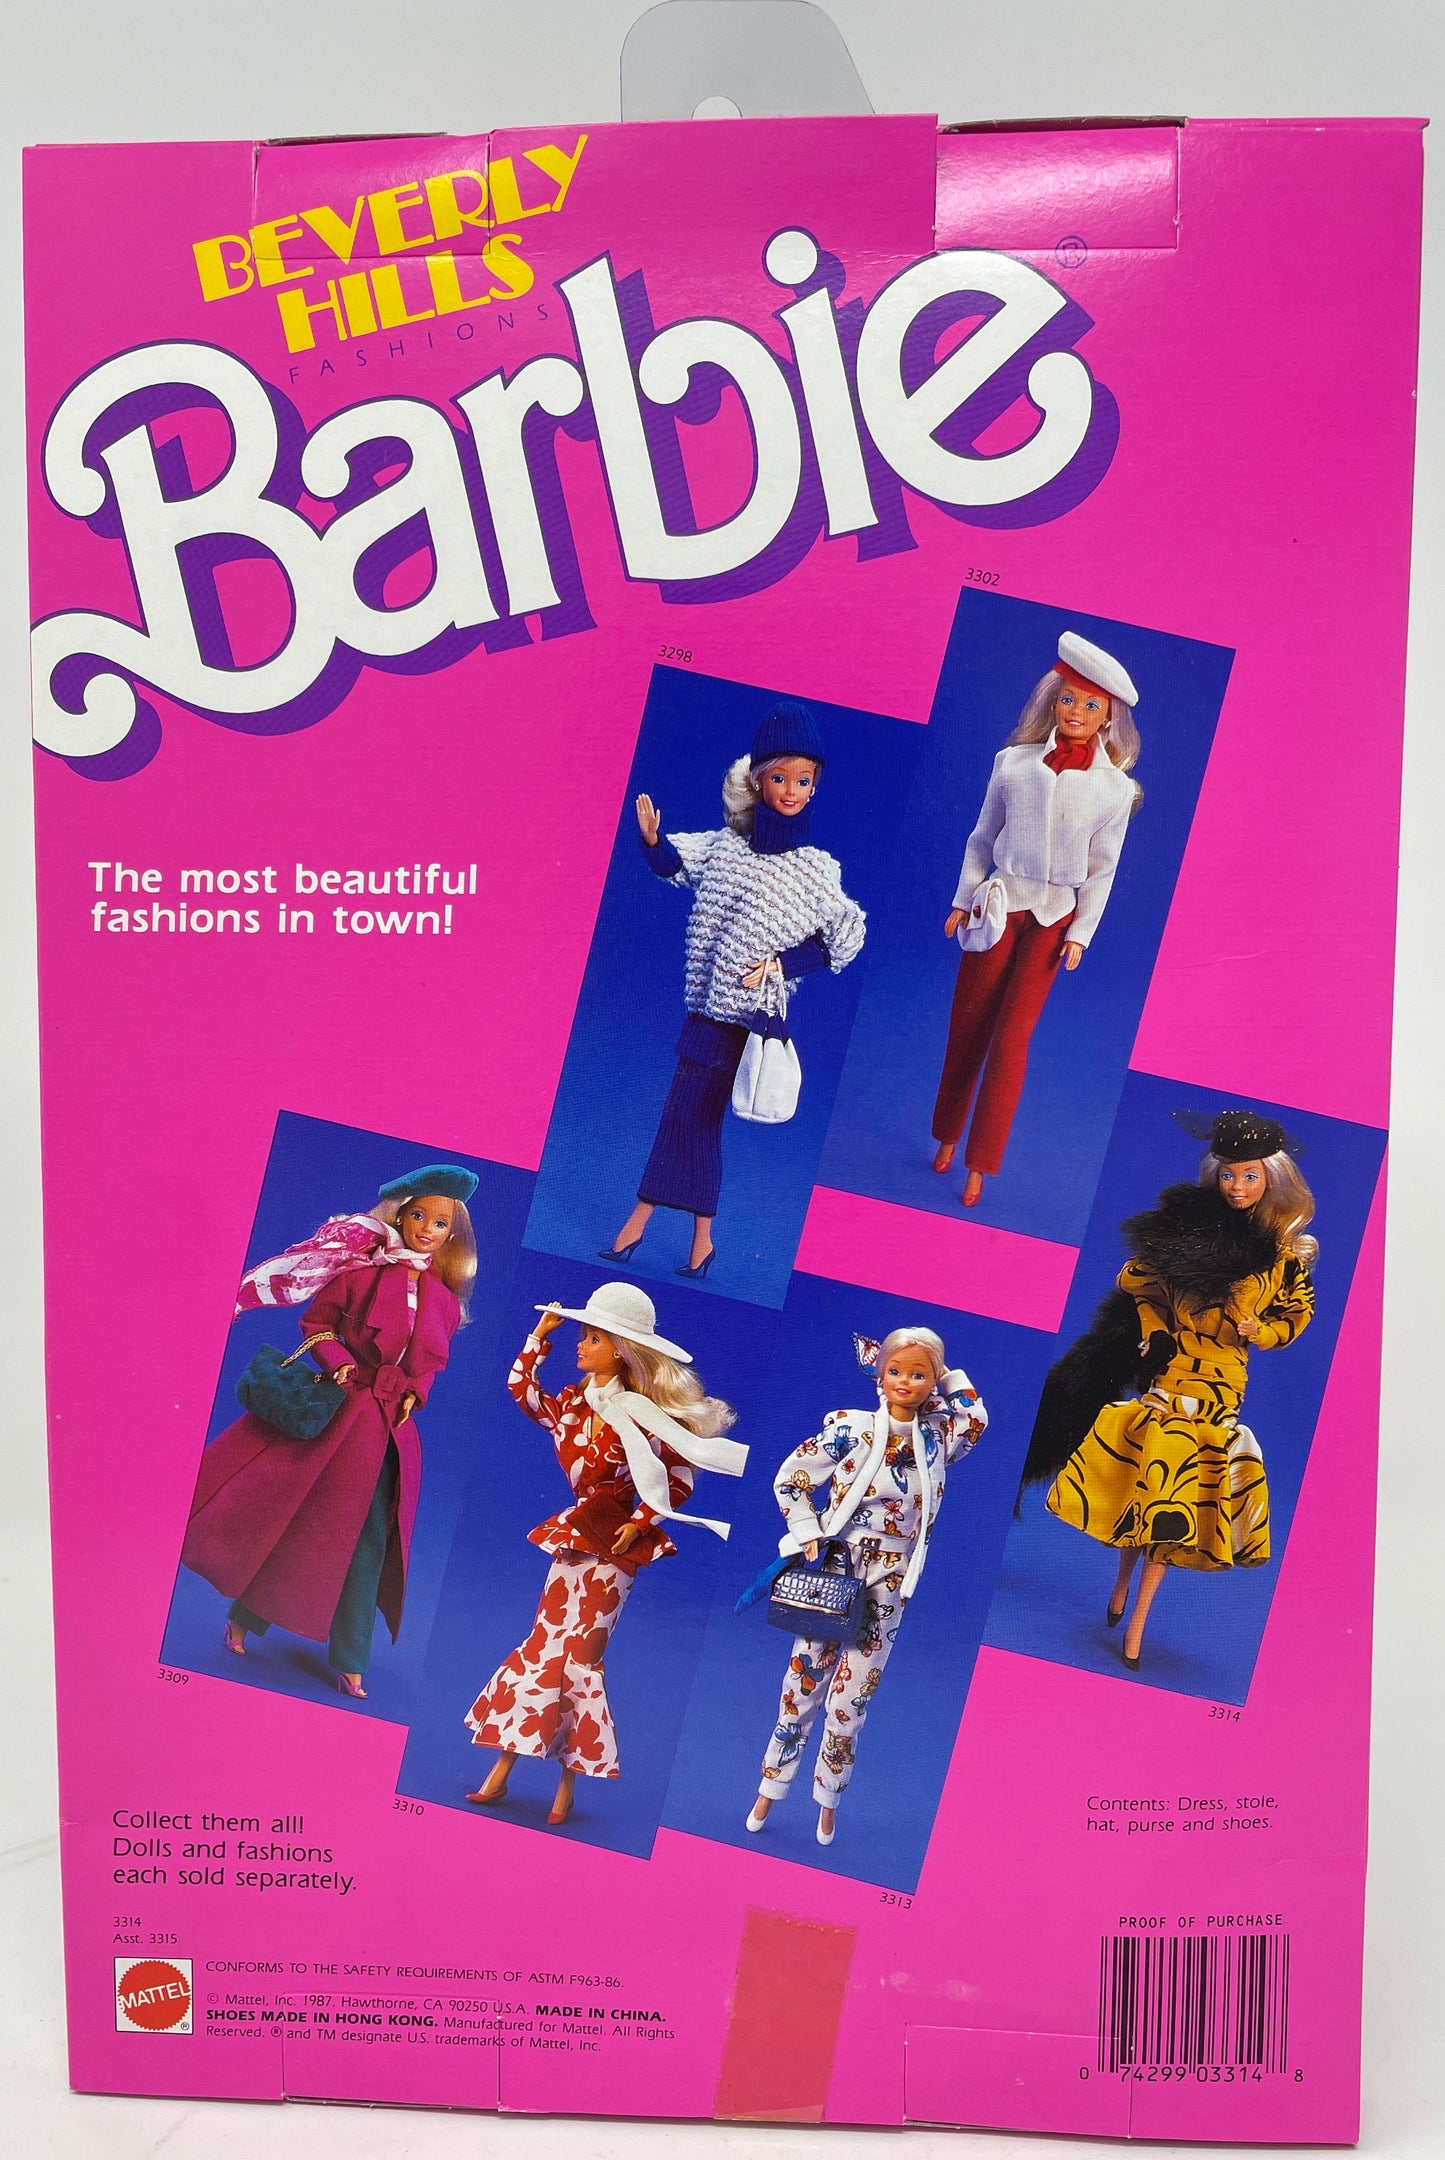 BEVERLY HILLS BARBIE - FASHIONS - #3314 - MATTEL 1987